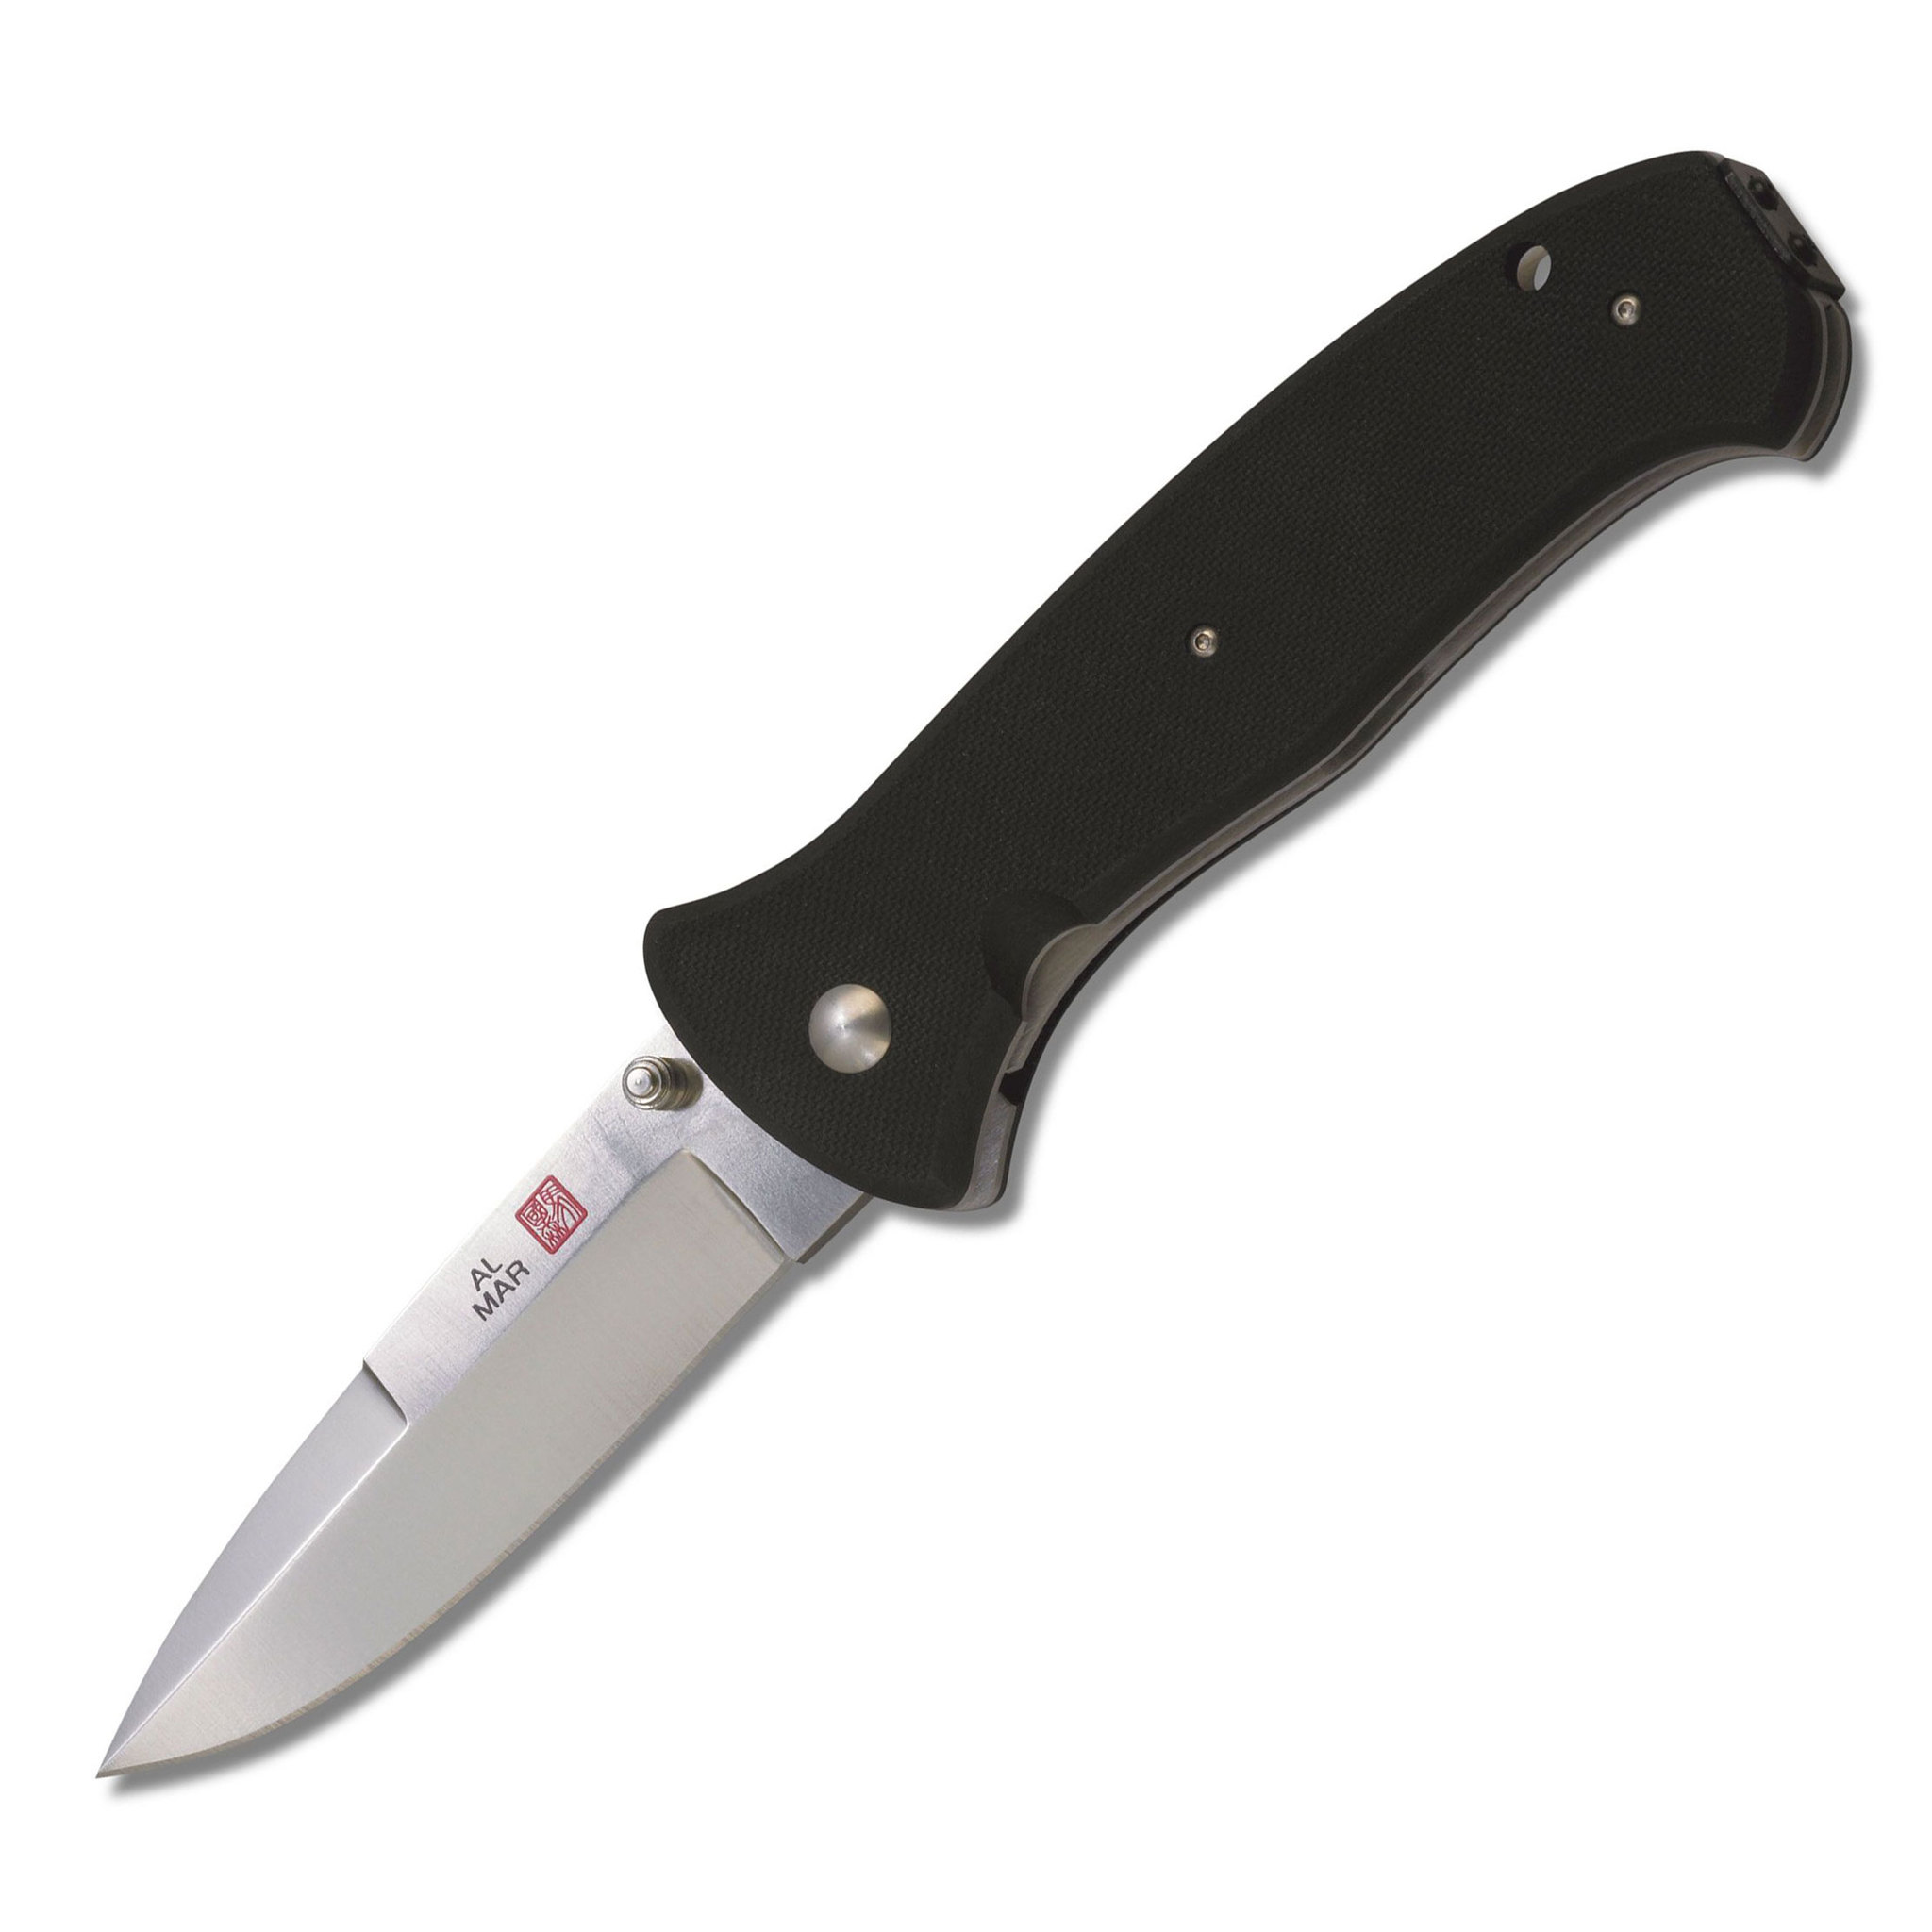 Нож складной Al Mar Mini Sere 2000™, сталь VG-10 Satin finish, рукоять стеклотекстолит G-10 нож складной al mar eagle heavy duty™ сталь aus 8 talon рукоять стеклотекстолит g 10